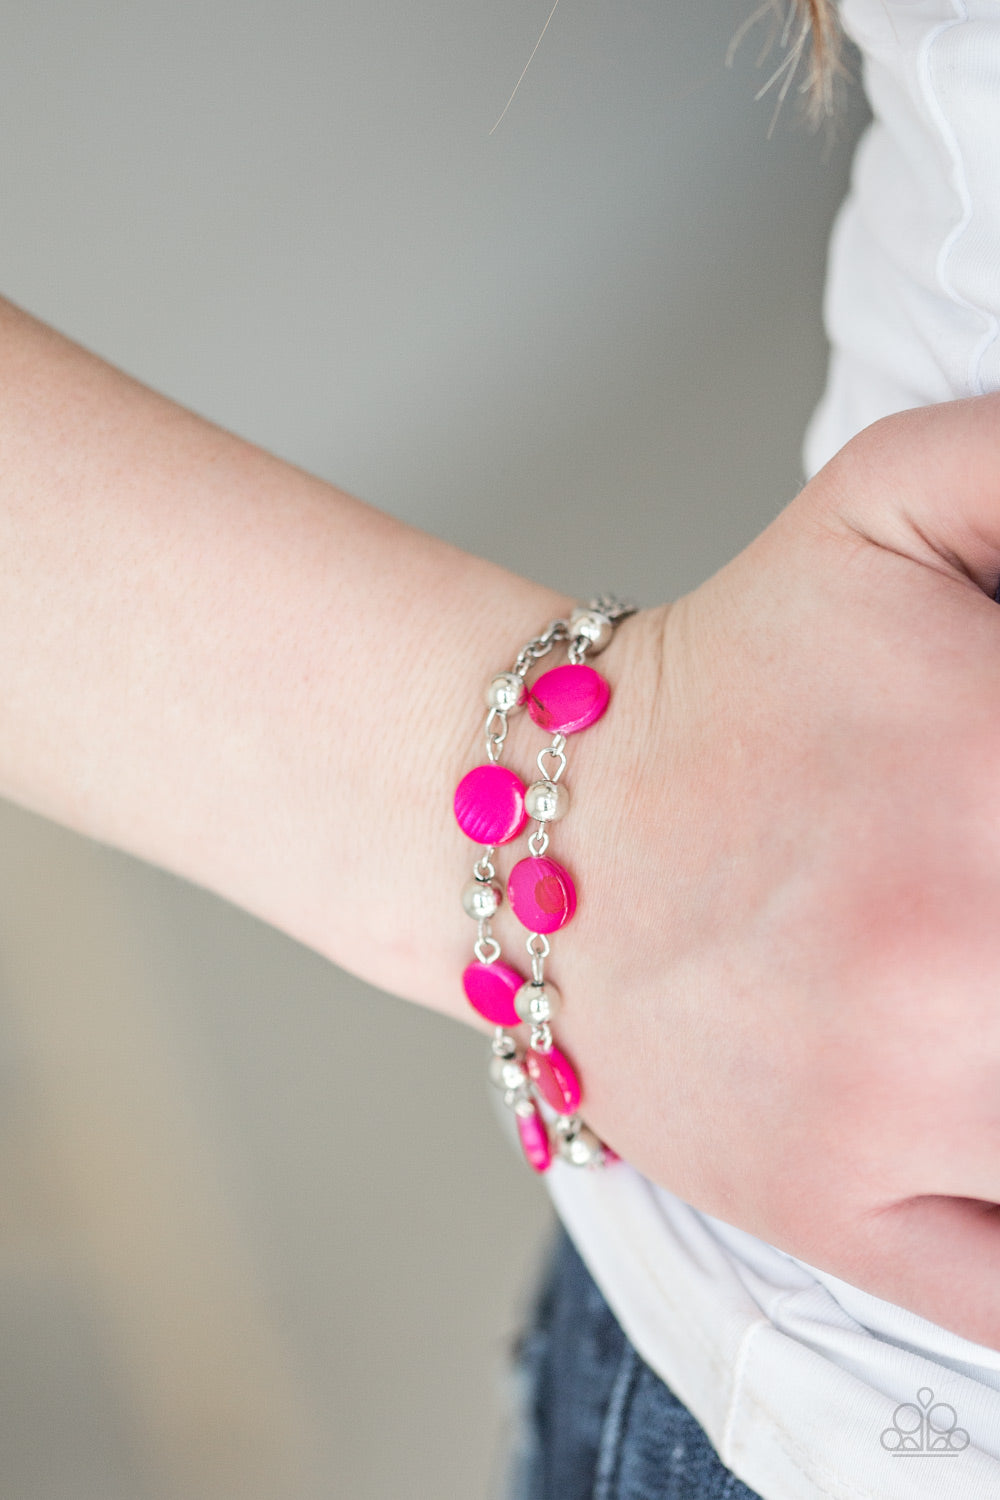 Paparazzi One BAY At A Time - Pink - Bracelet - $5 Jewelry With Ashley Swint